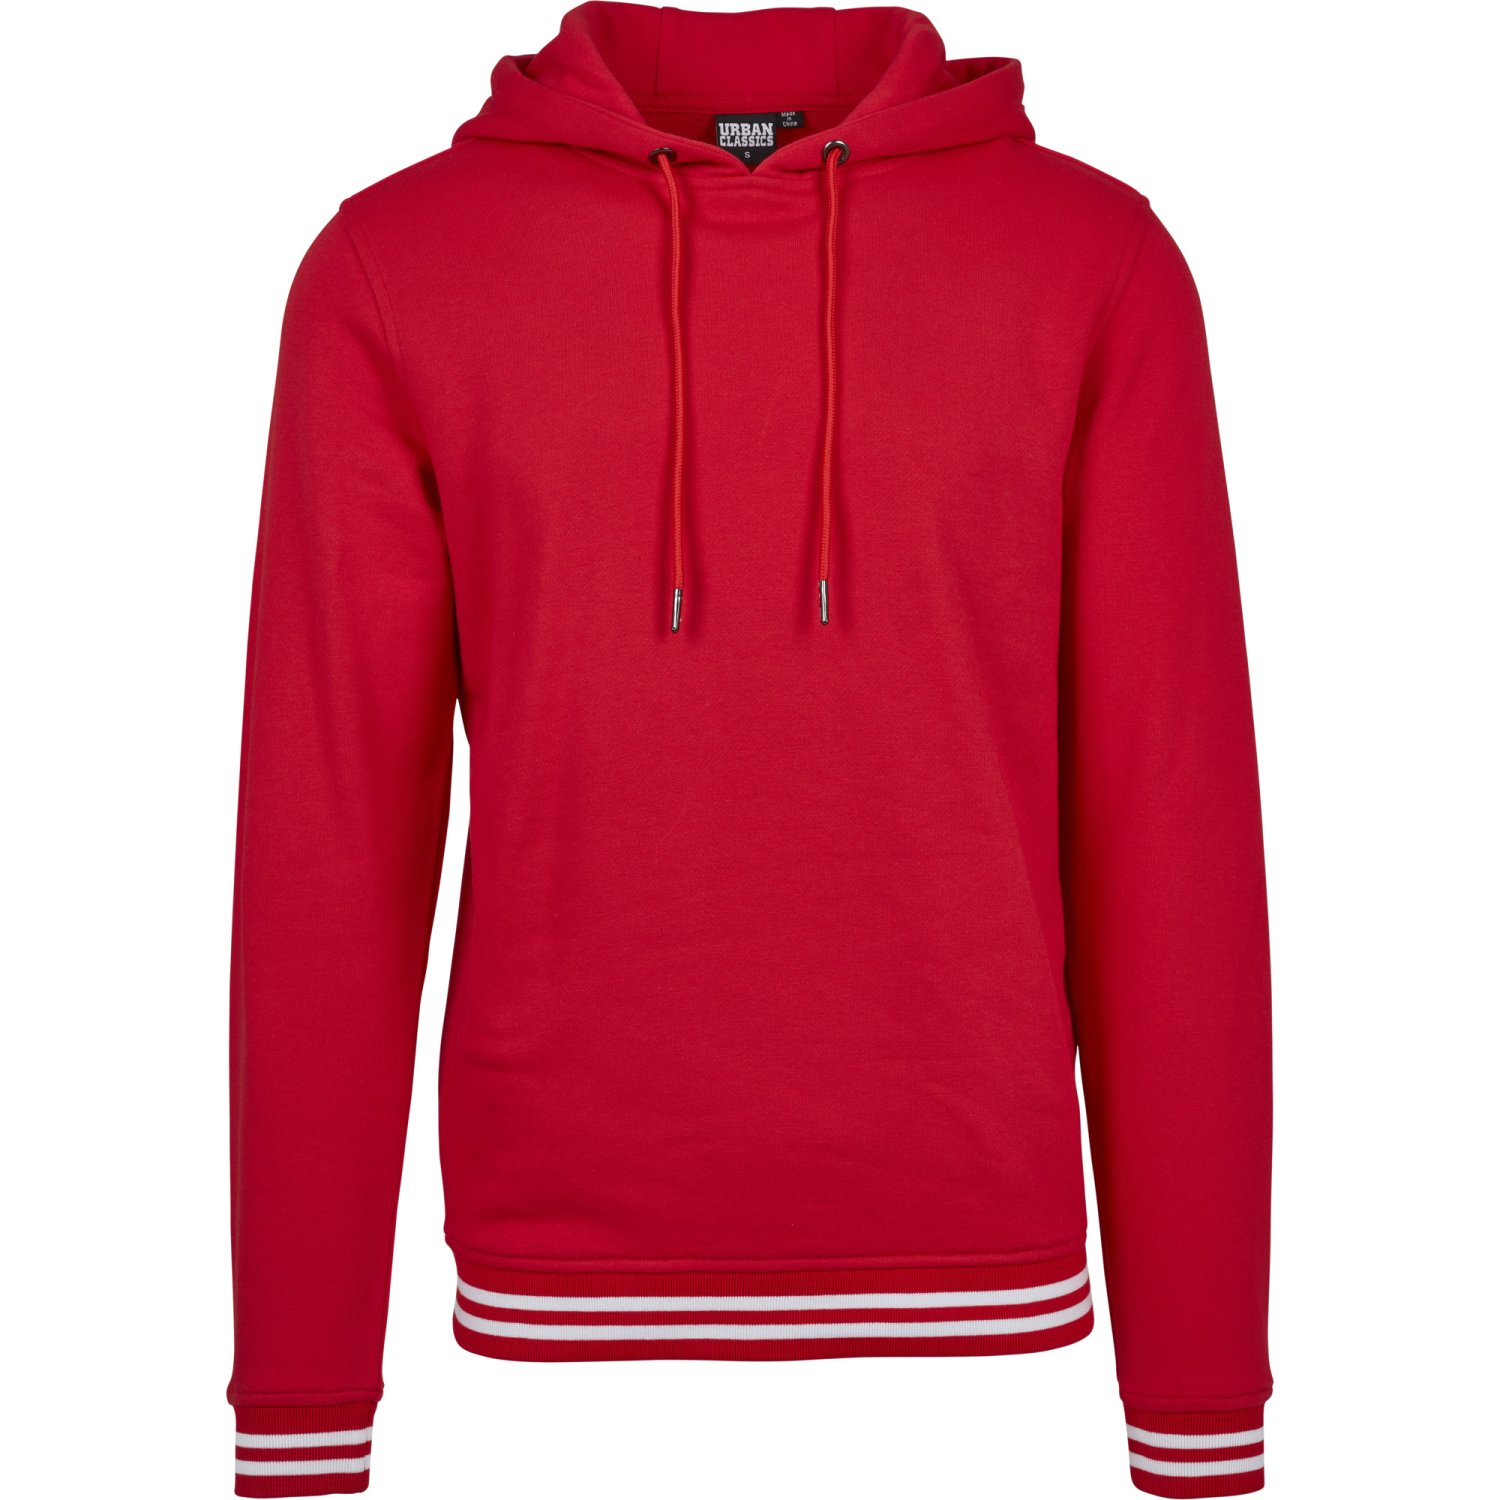 Buy Urban Classics - COLLEGE Sweatshirt Hoody firered